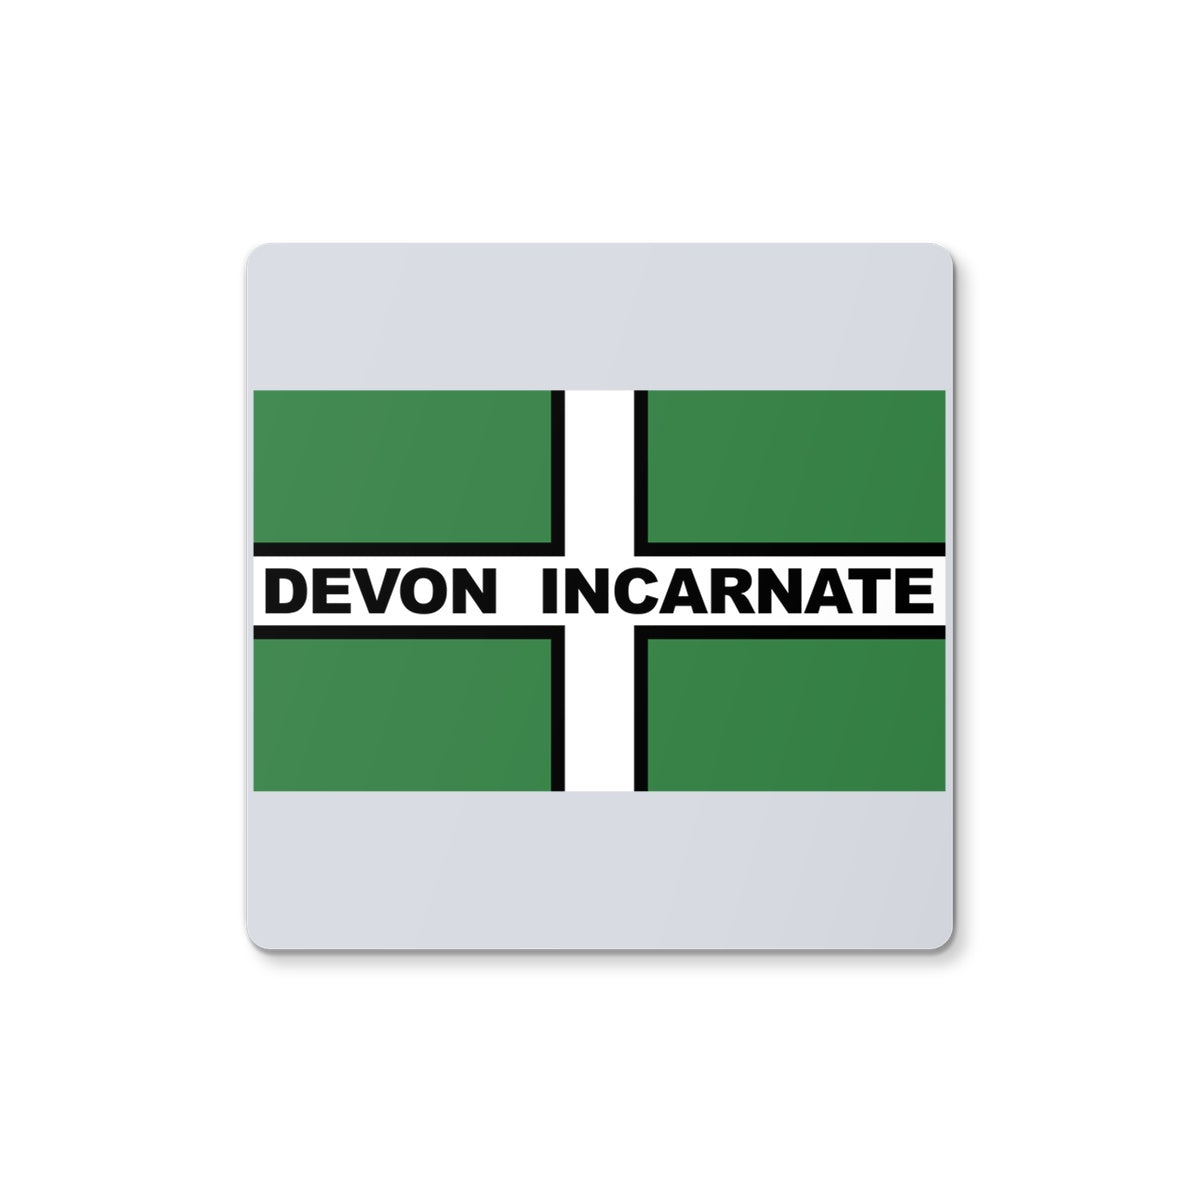 Devon Incarnate Coaster